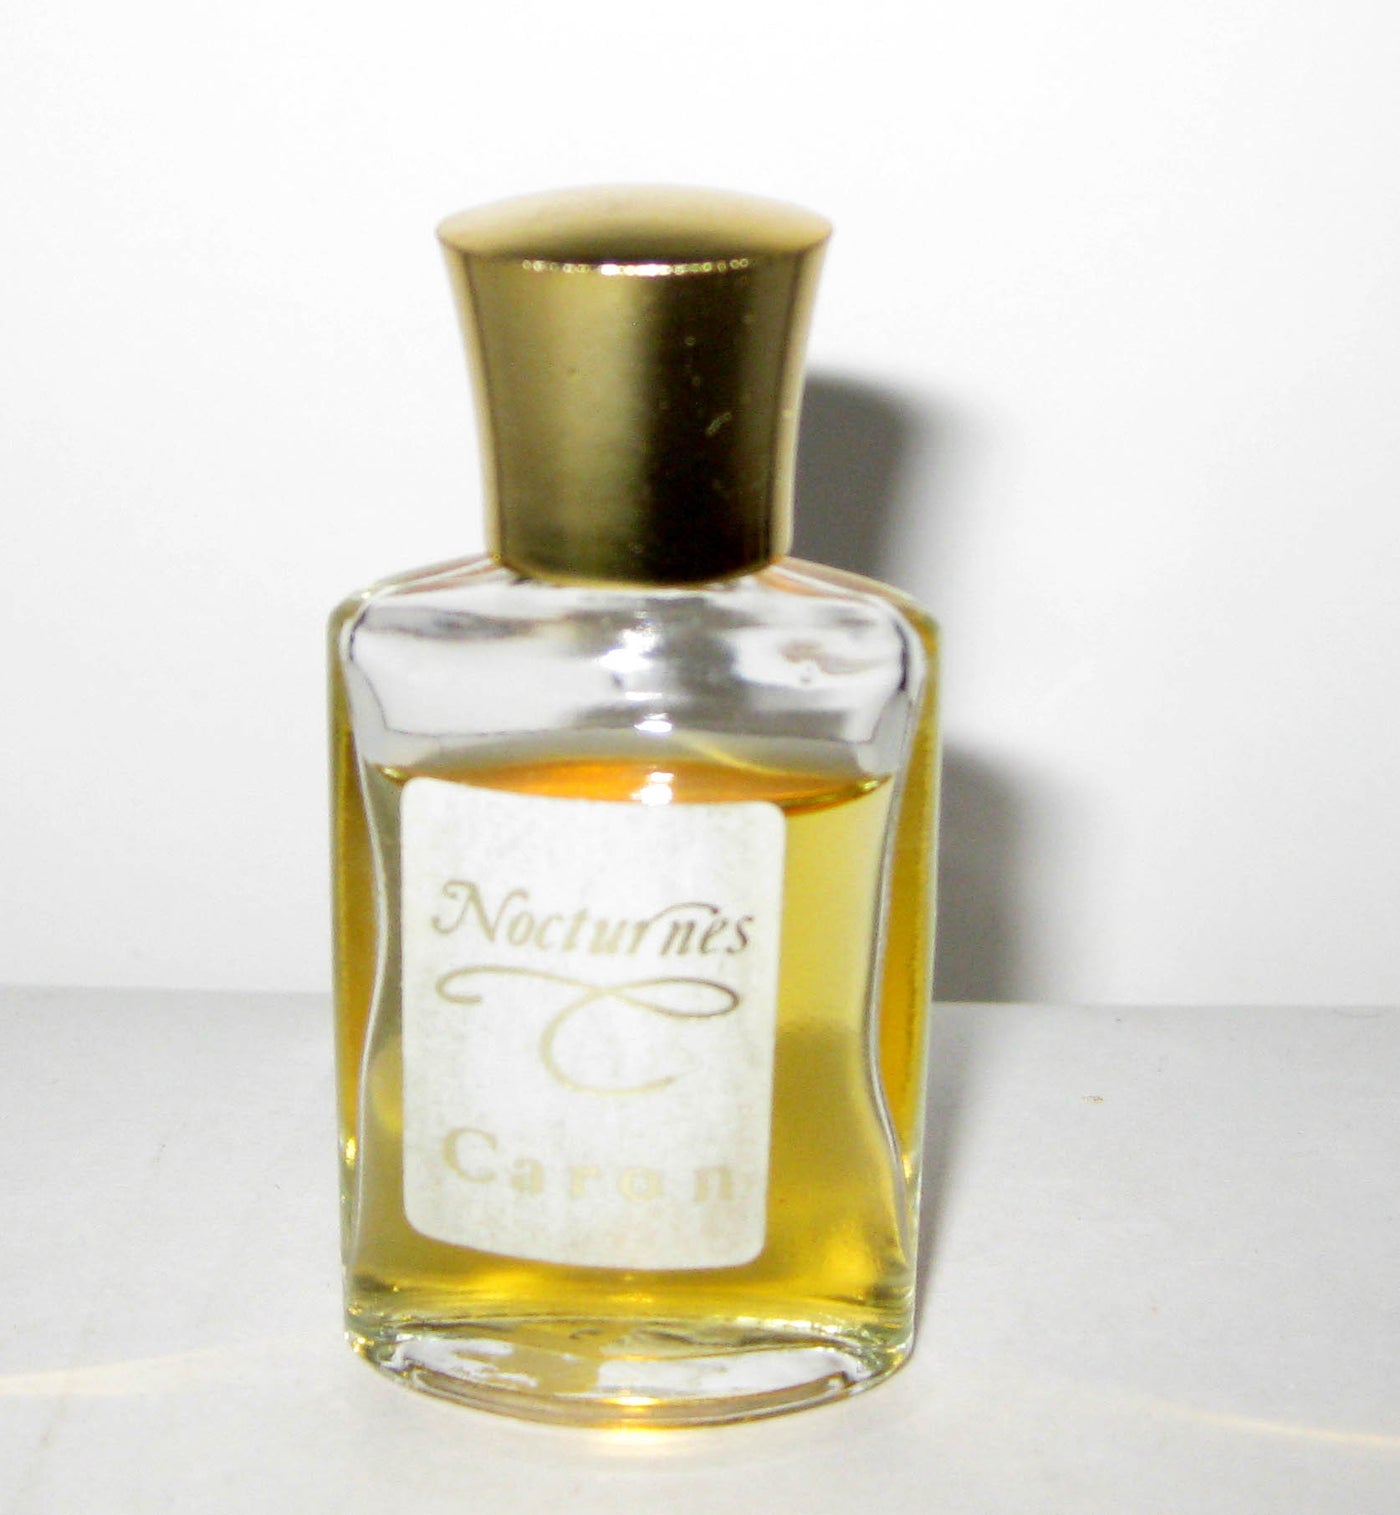 Caron Nocturnes Perfume Mini